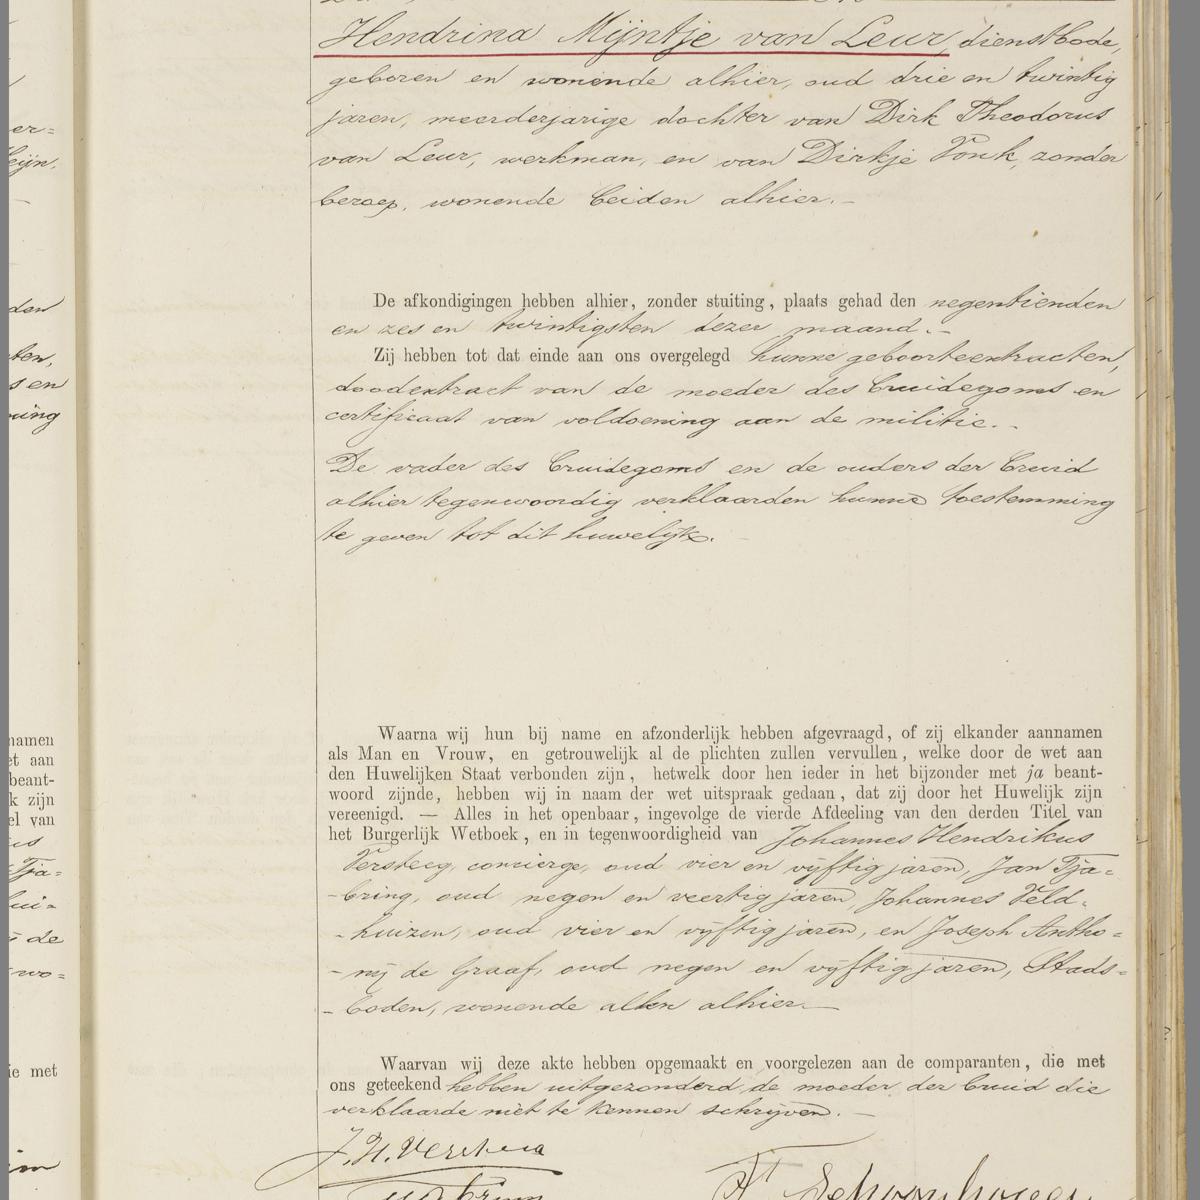 Civil registry of marriages, Utrecht, 1889, record 223